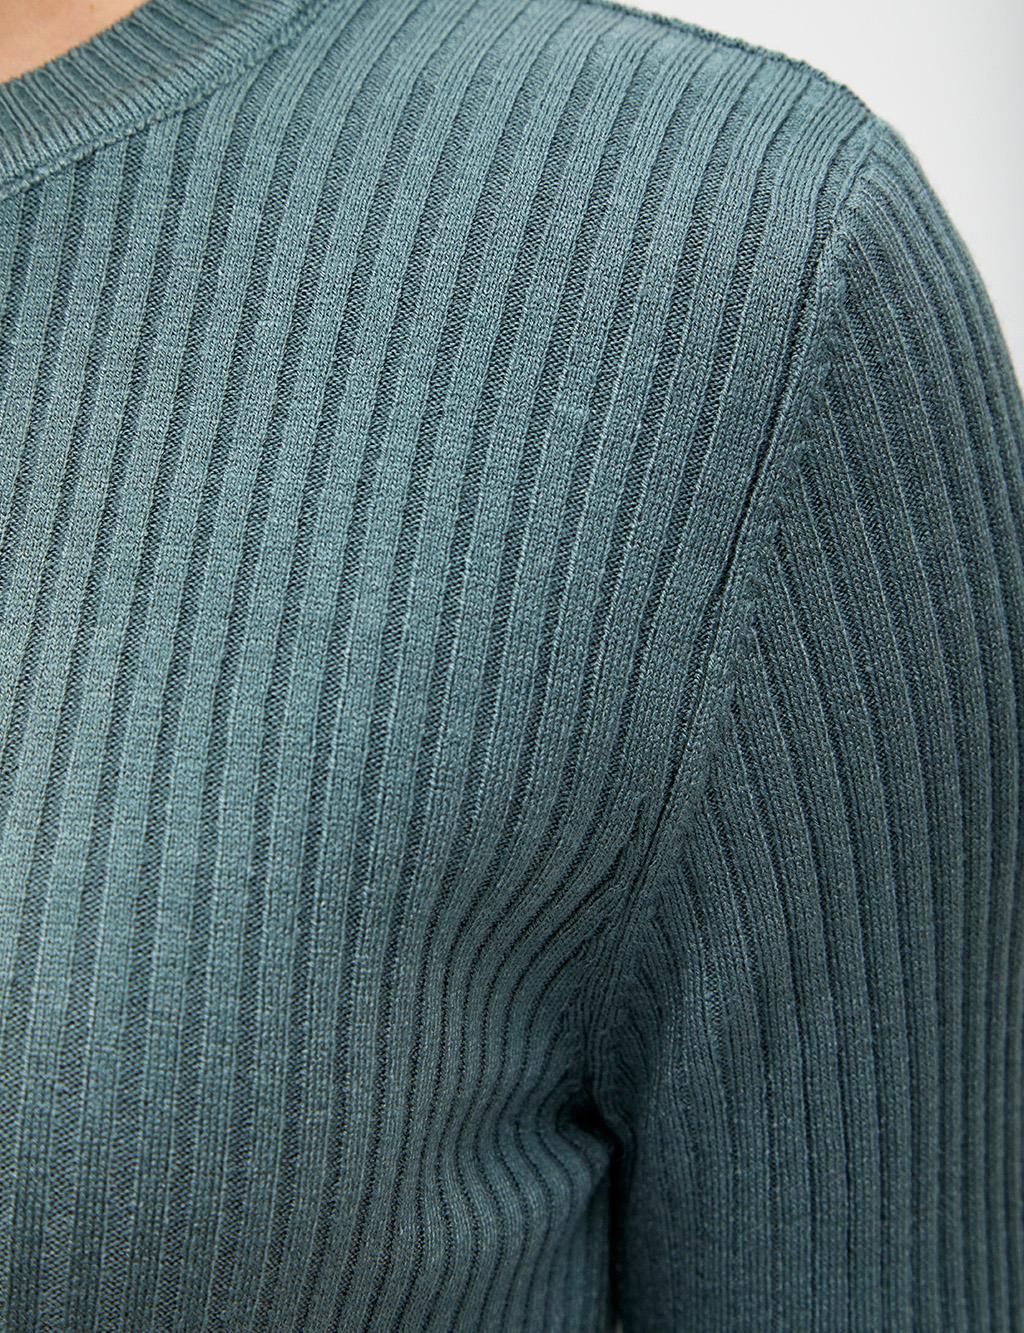 Round Neck Collar Corduroy Knitwear Blouse Musty Green